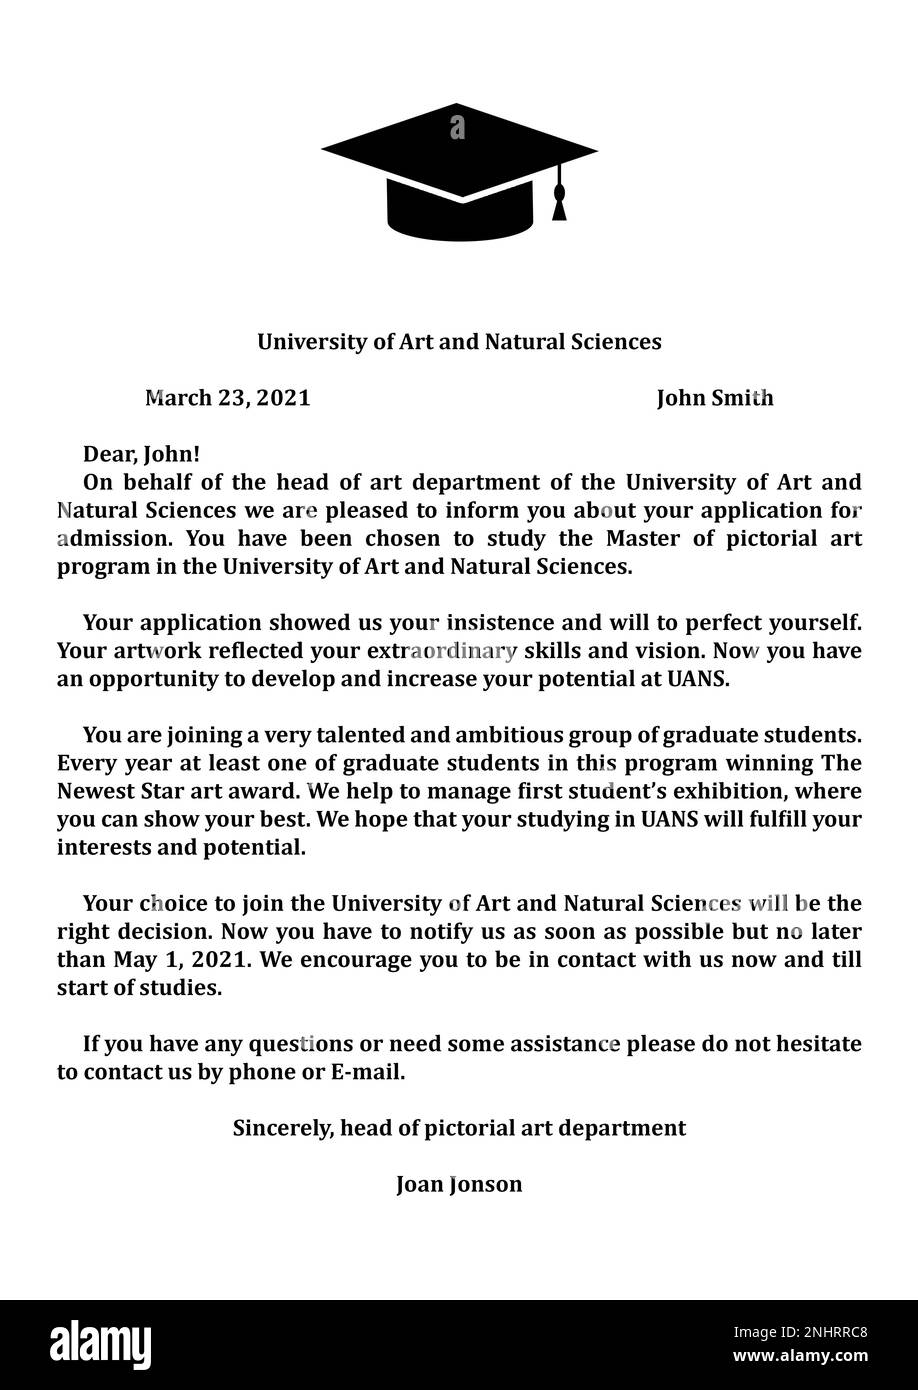 University acceptance letter to prospective student, illustration Stock Photo